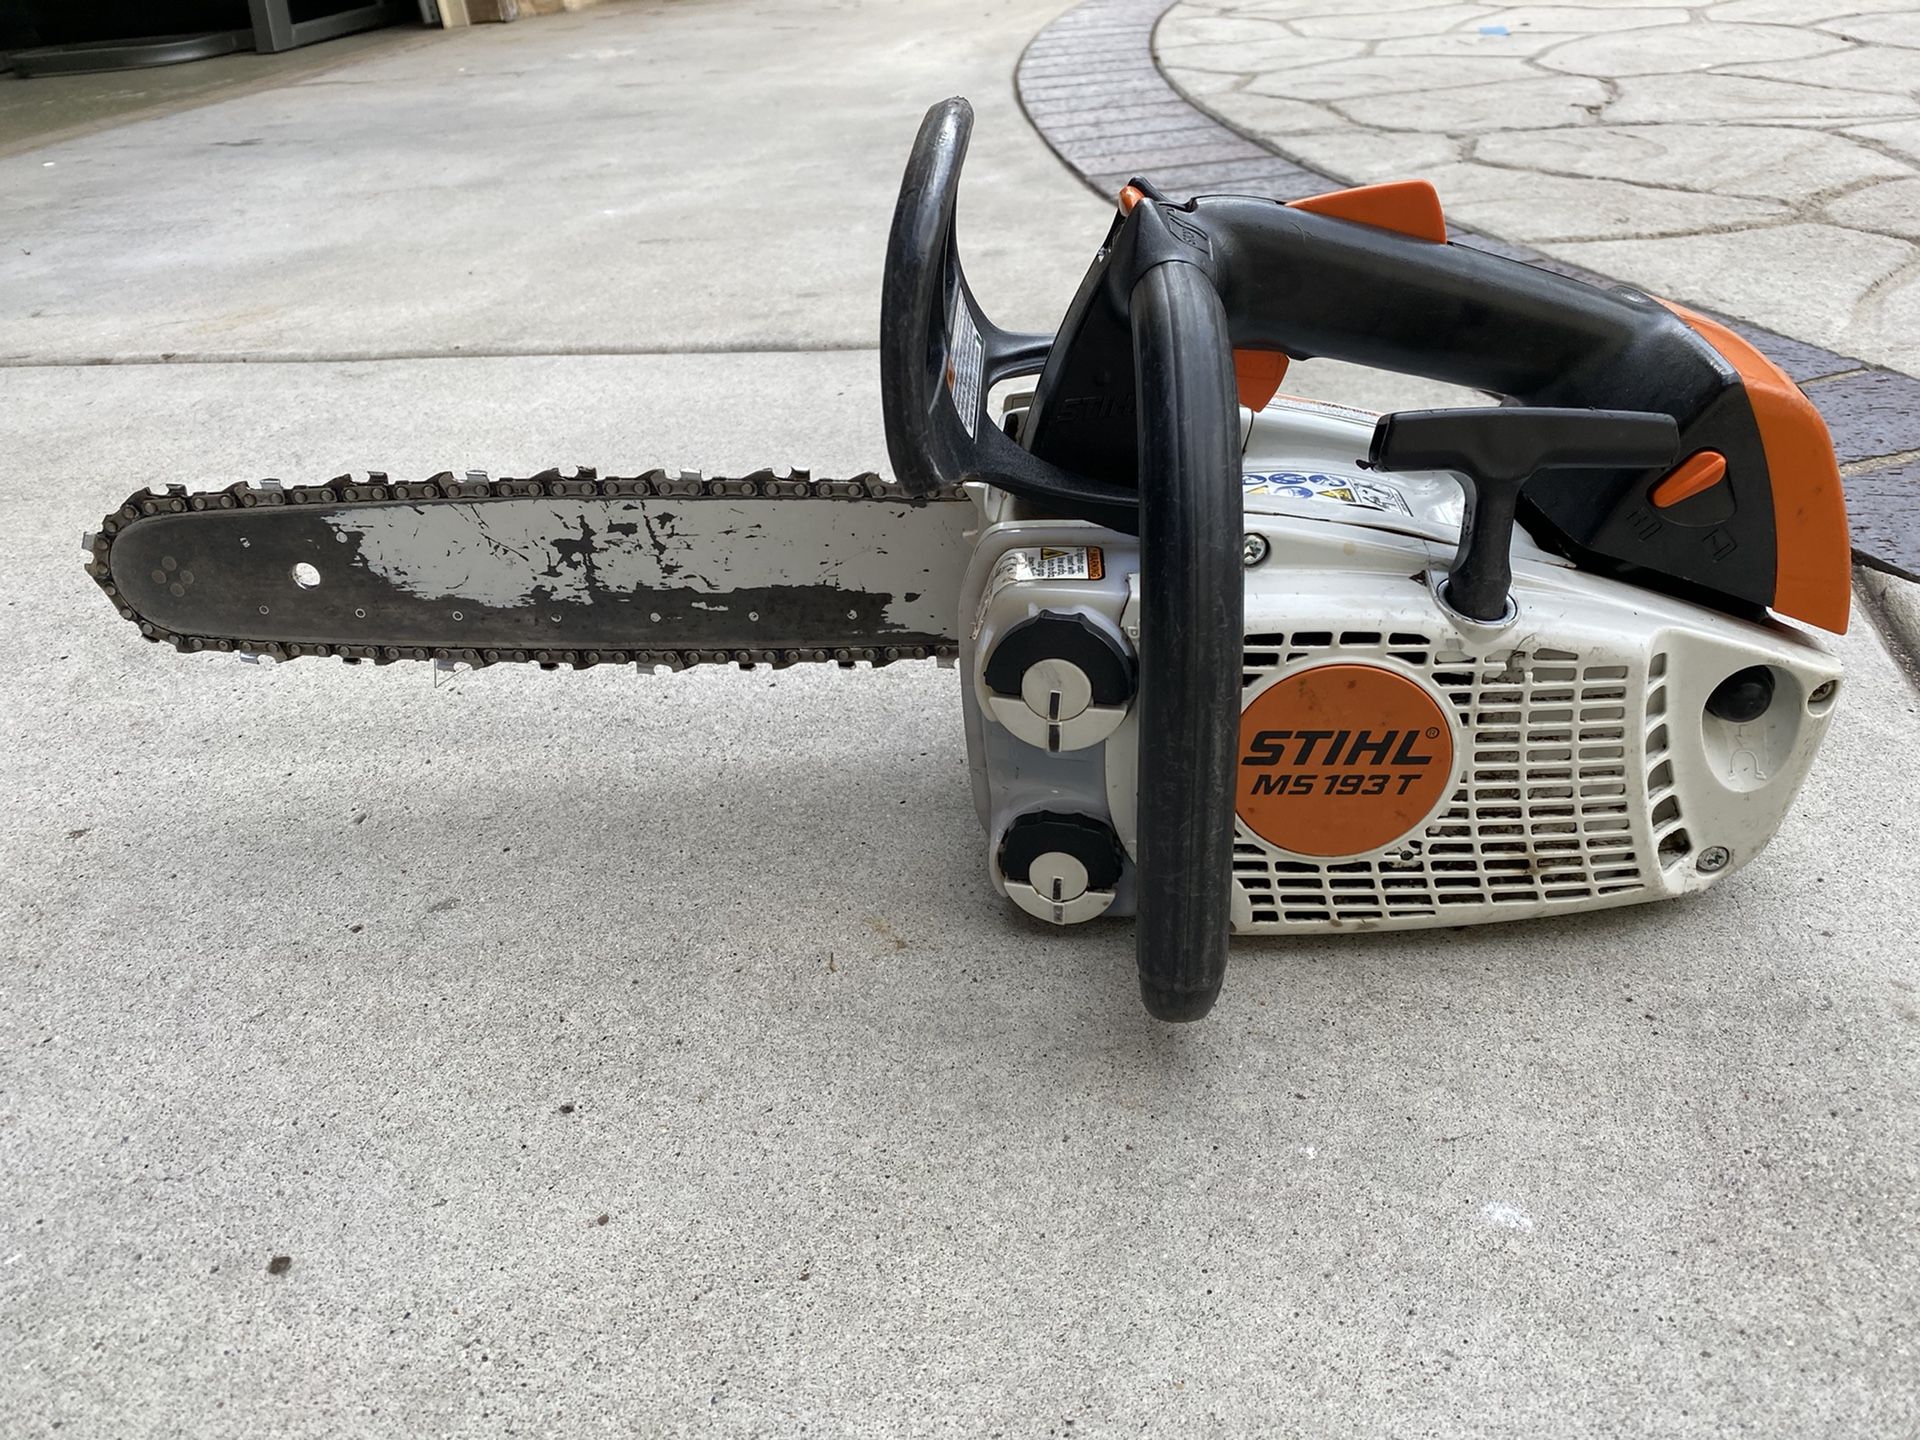 Stihl ms193 arborist top handle chainsaw